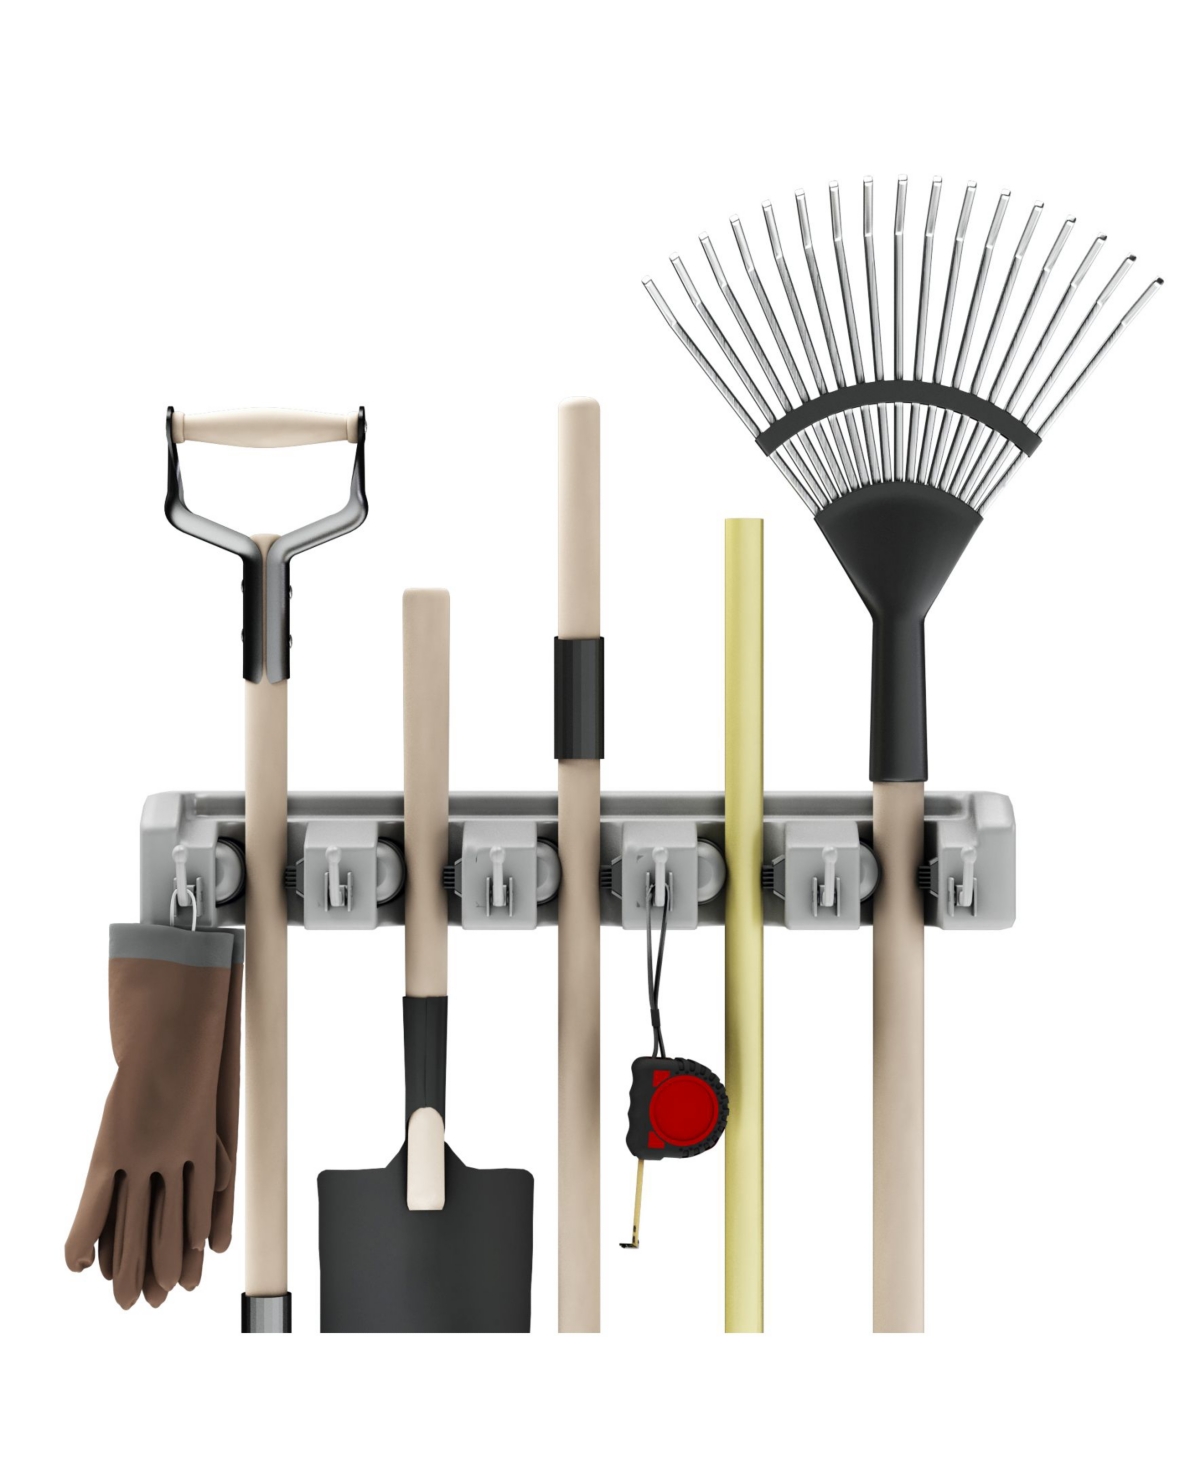 Shovel, Rake and Tool Holder with Hooks - Wall Mounted Organizer by Stalwart - Multi